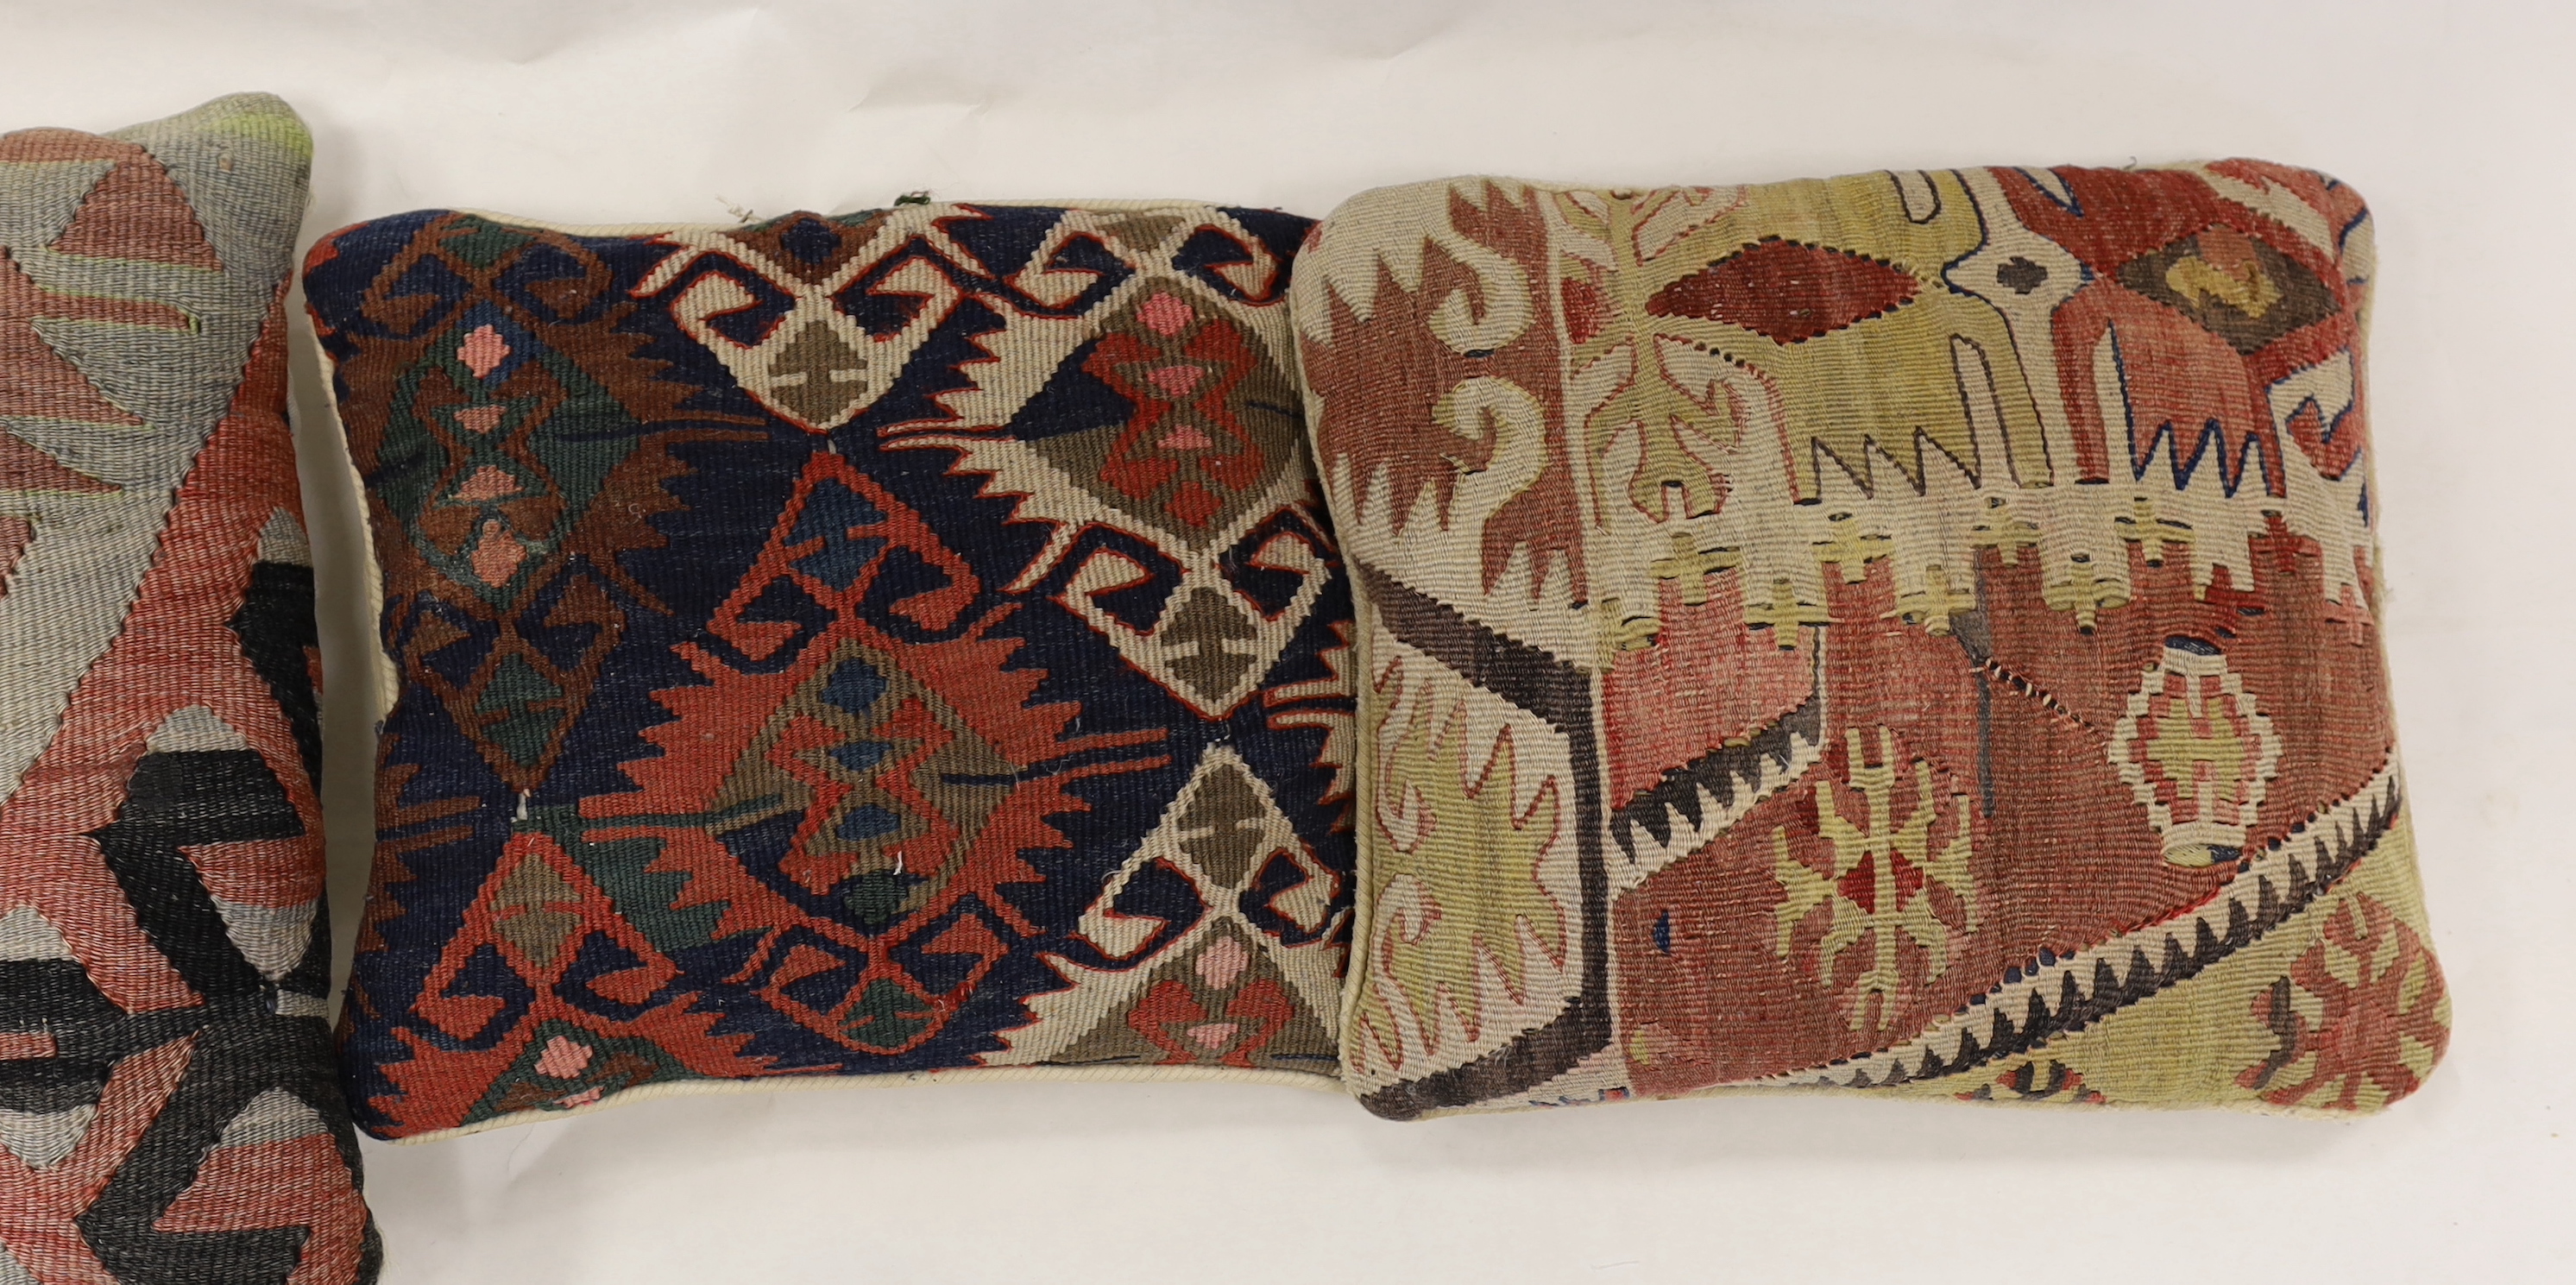 Four Kelim cushions, largest 43cm square